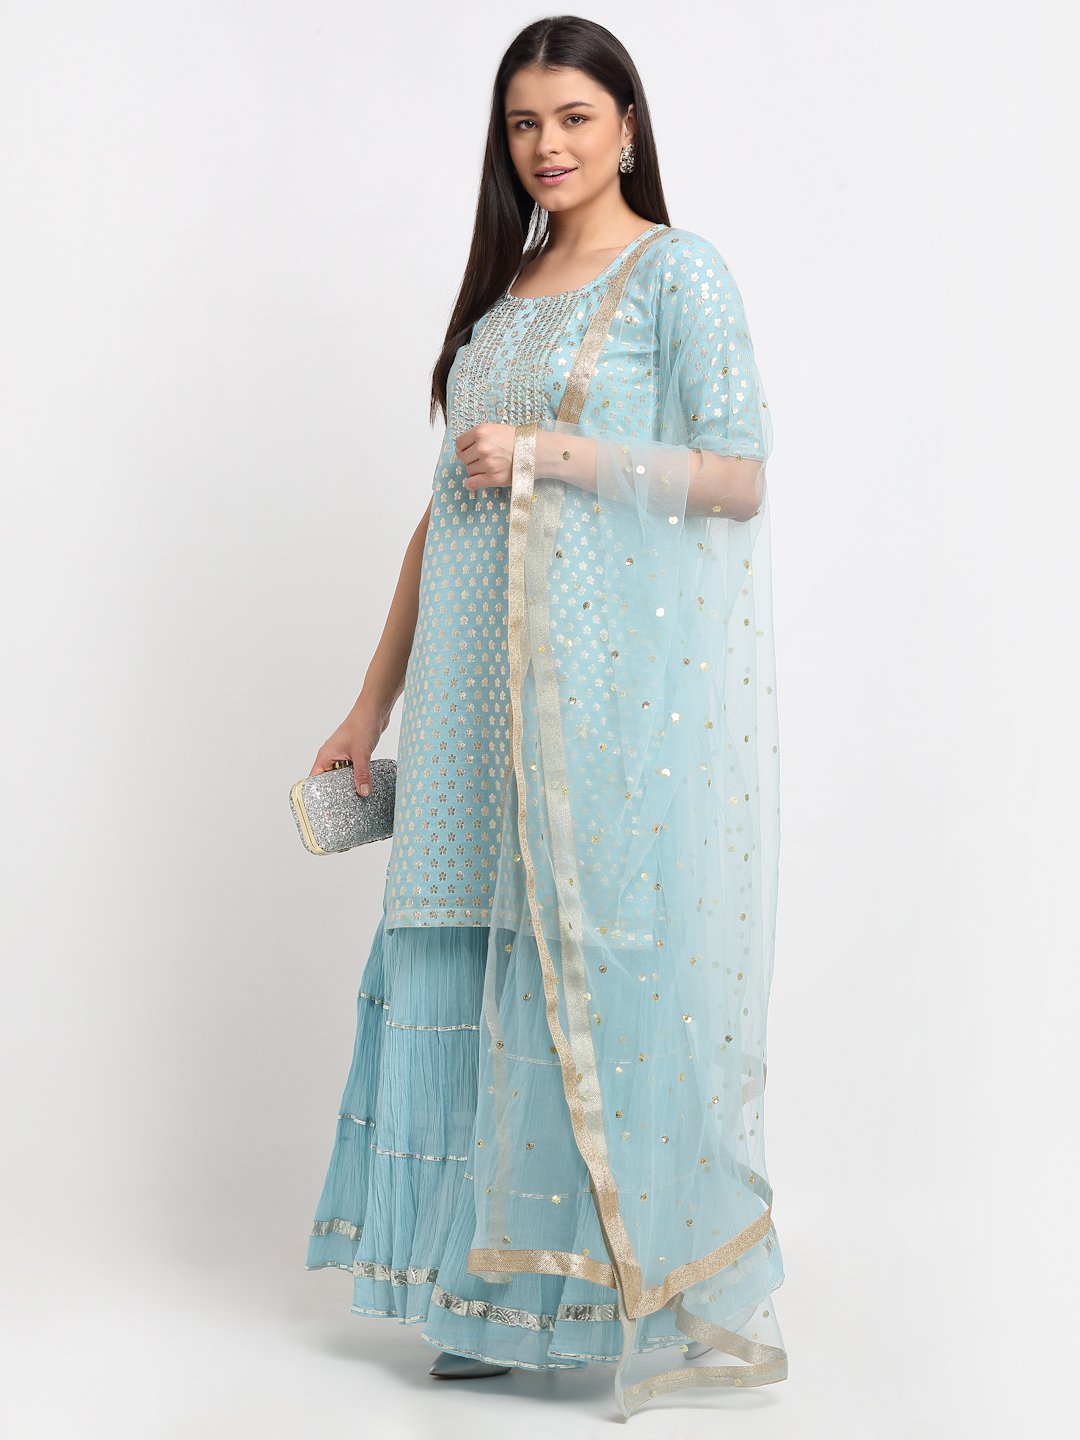 Beautiful Hand made linen-Silk Kurta with embroidery detailing. | Silk kurti  designs, Stylish dresses, Designs for dresses